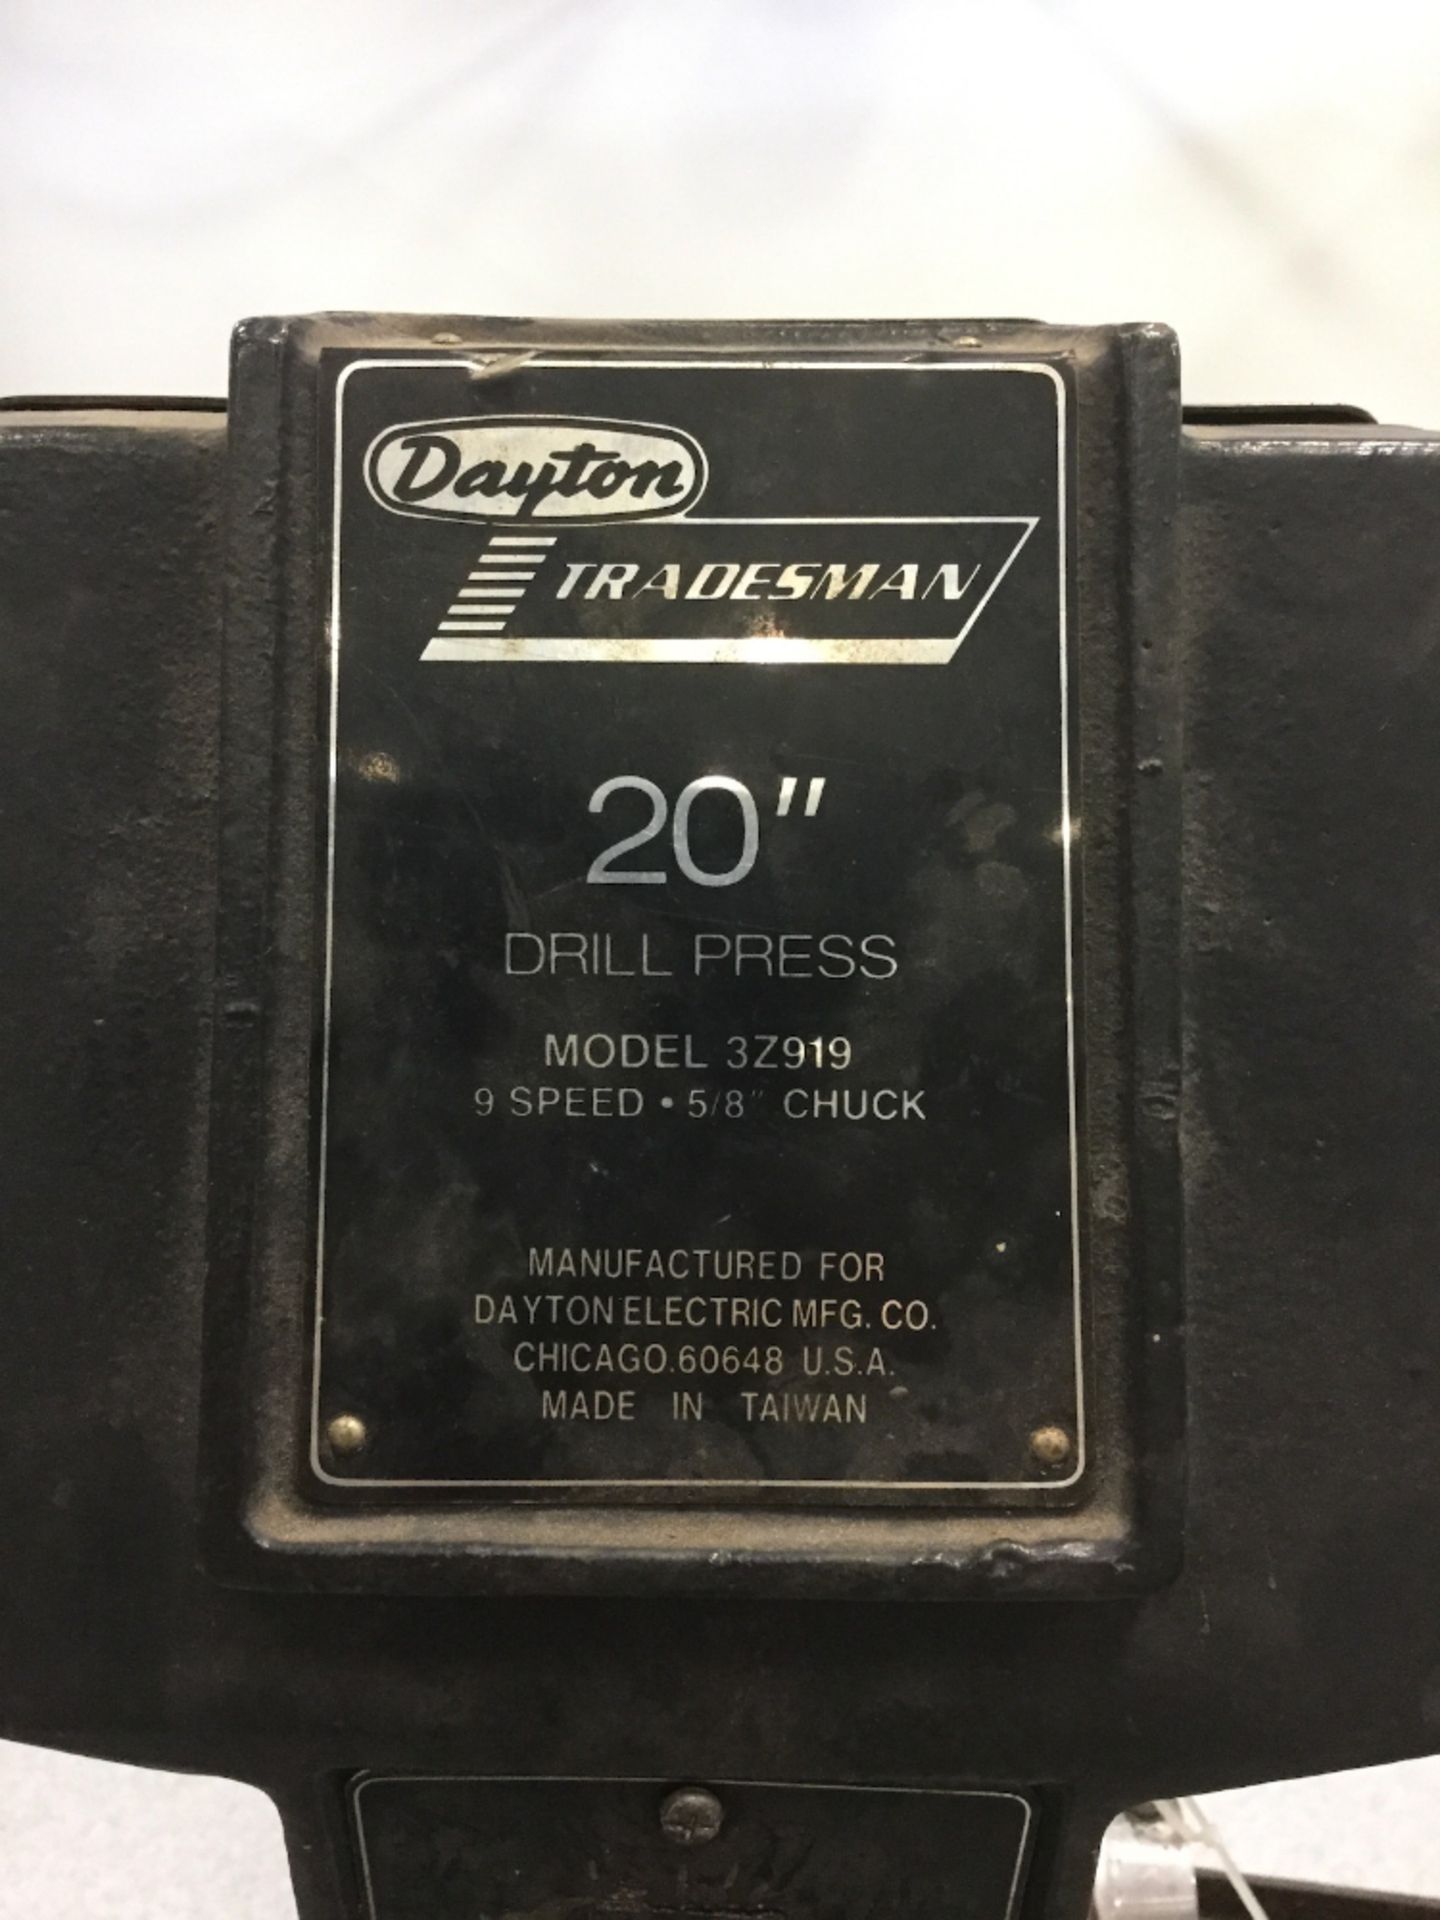 Dayton Tradesman 20" Drill Press - Image 2 of 4